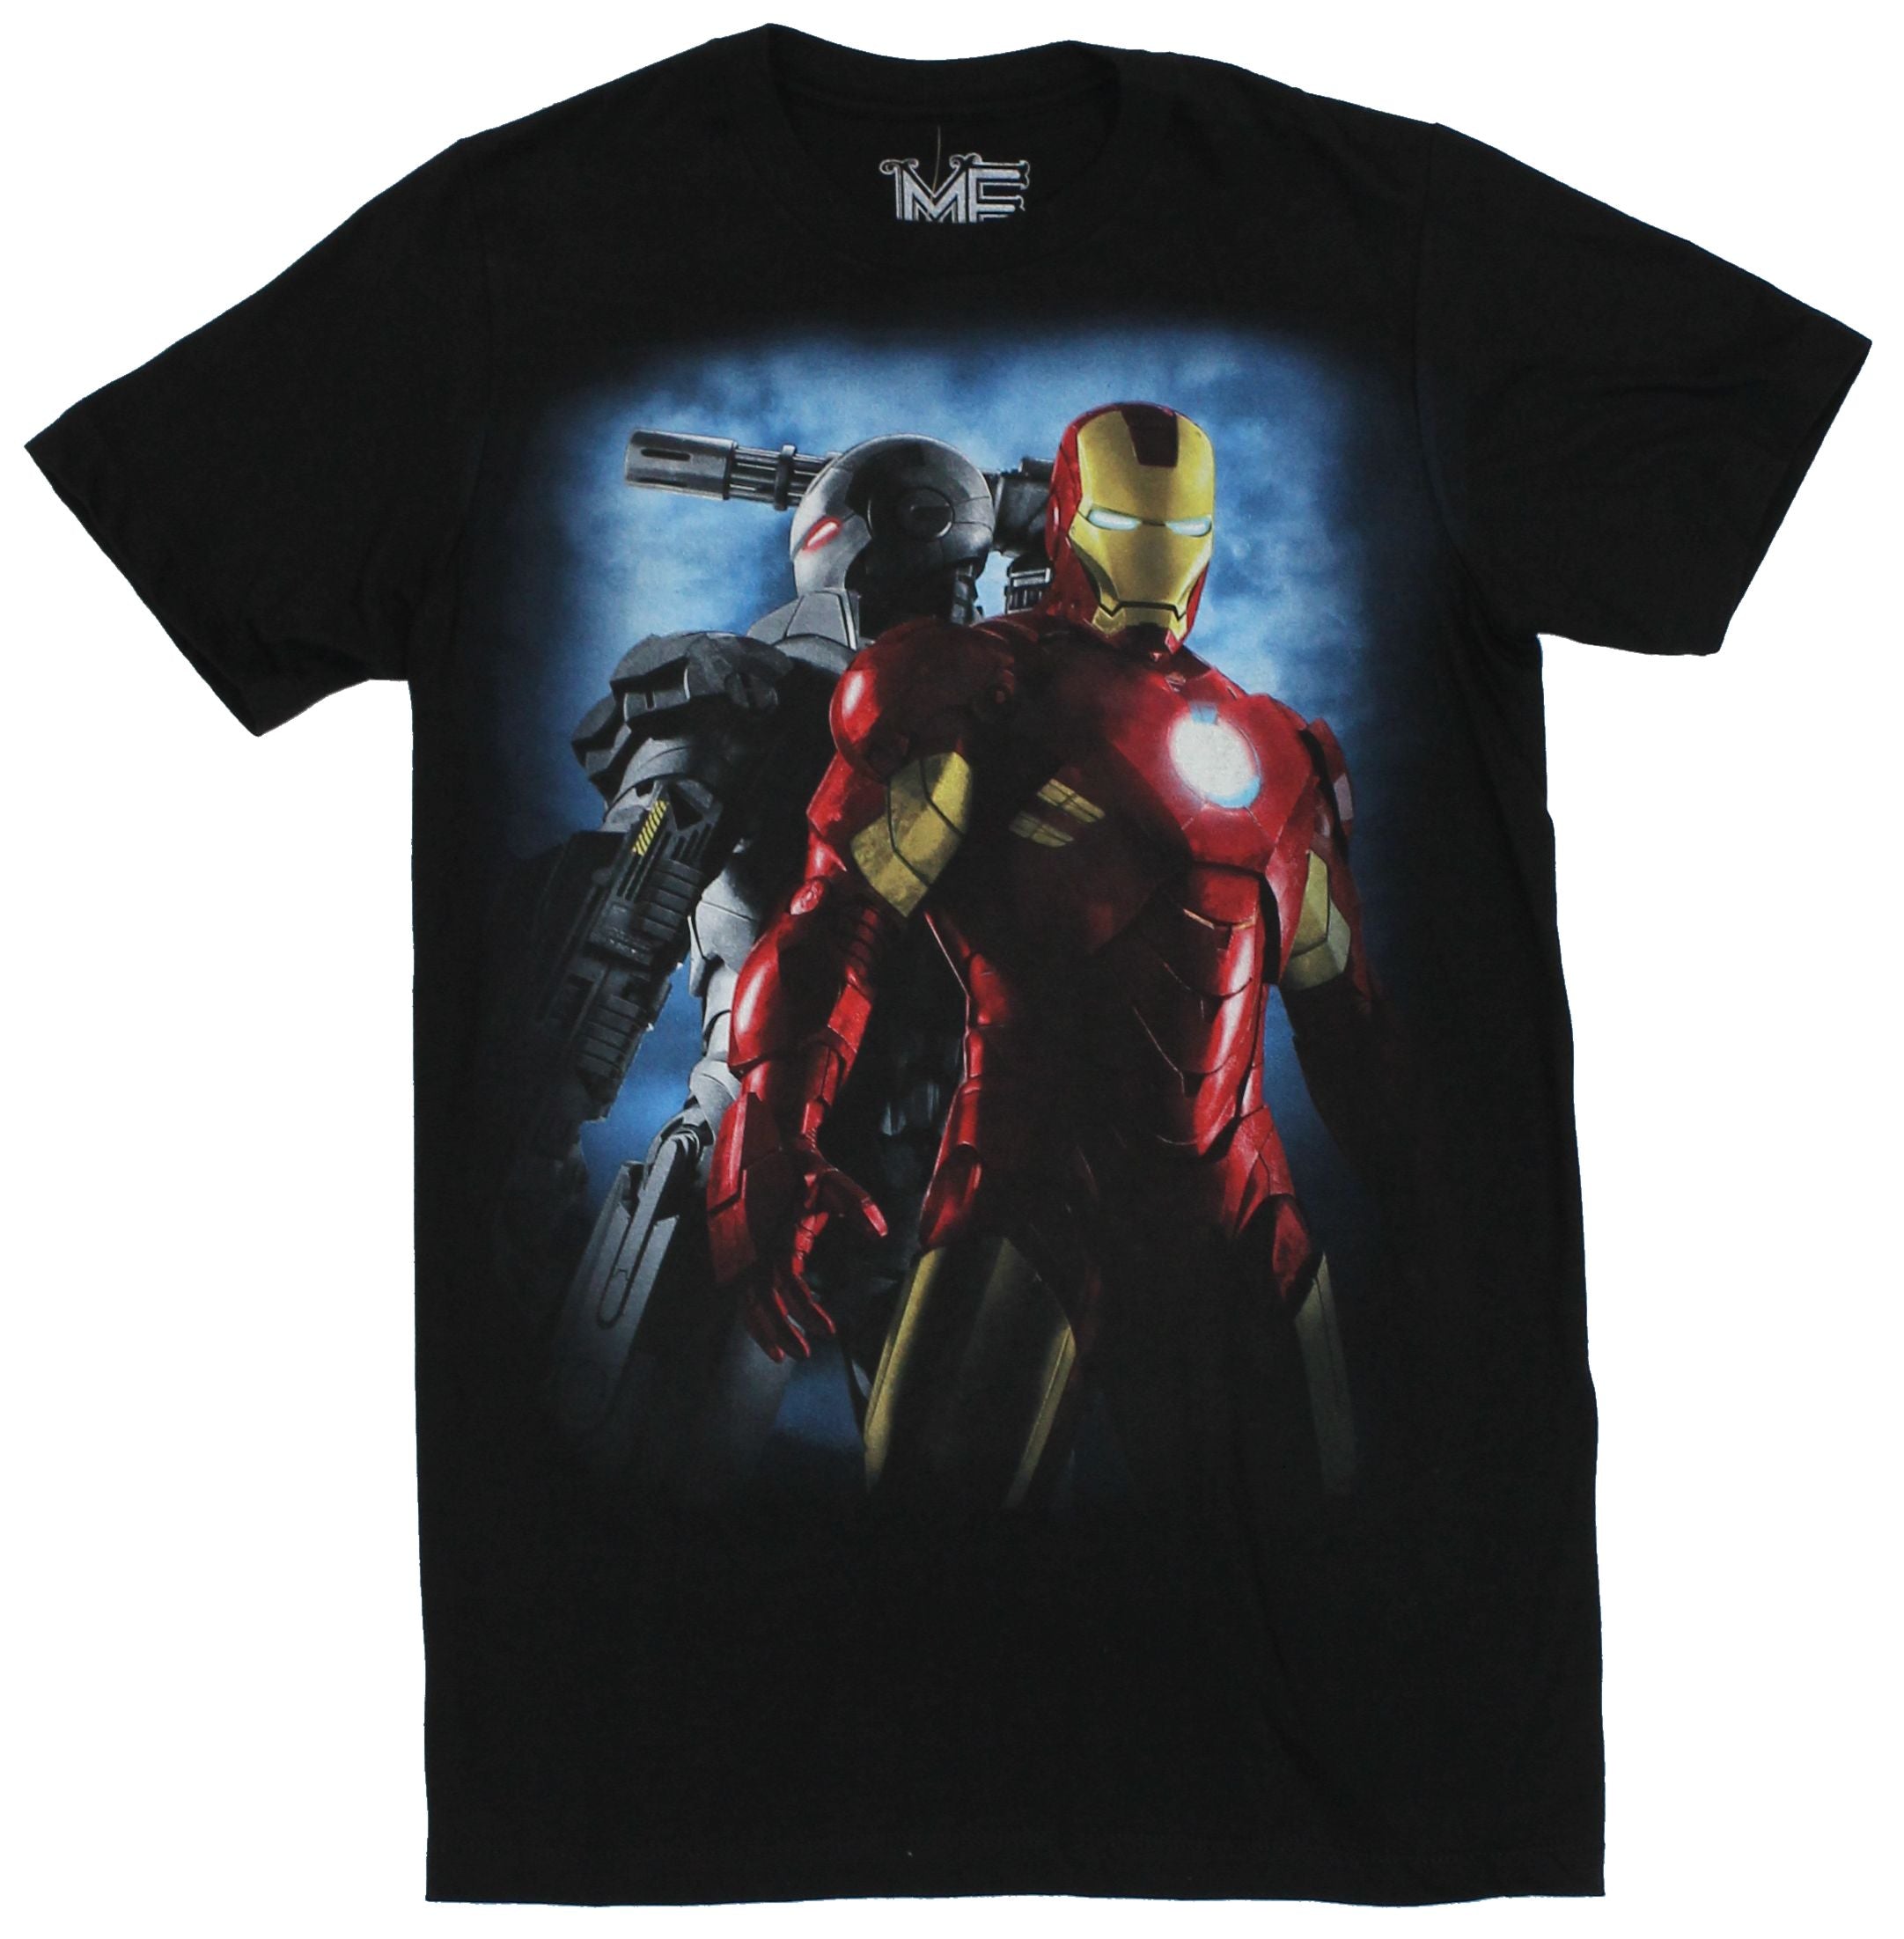 Iron Man and War Machine Mens T-Shirt  - Back to Back Movie Image on Black